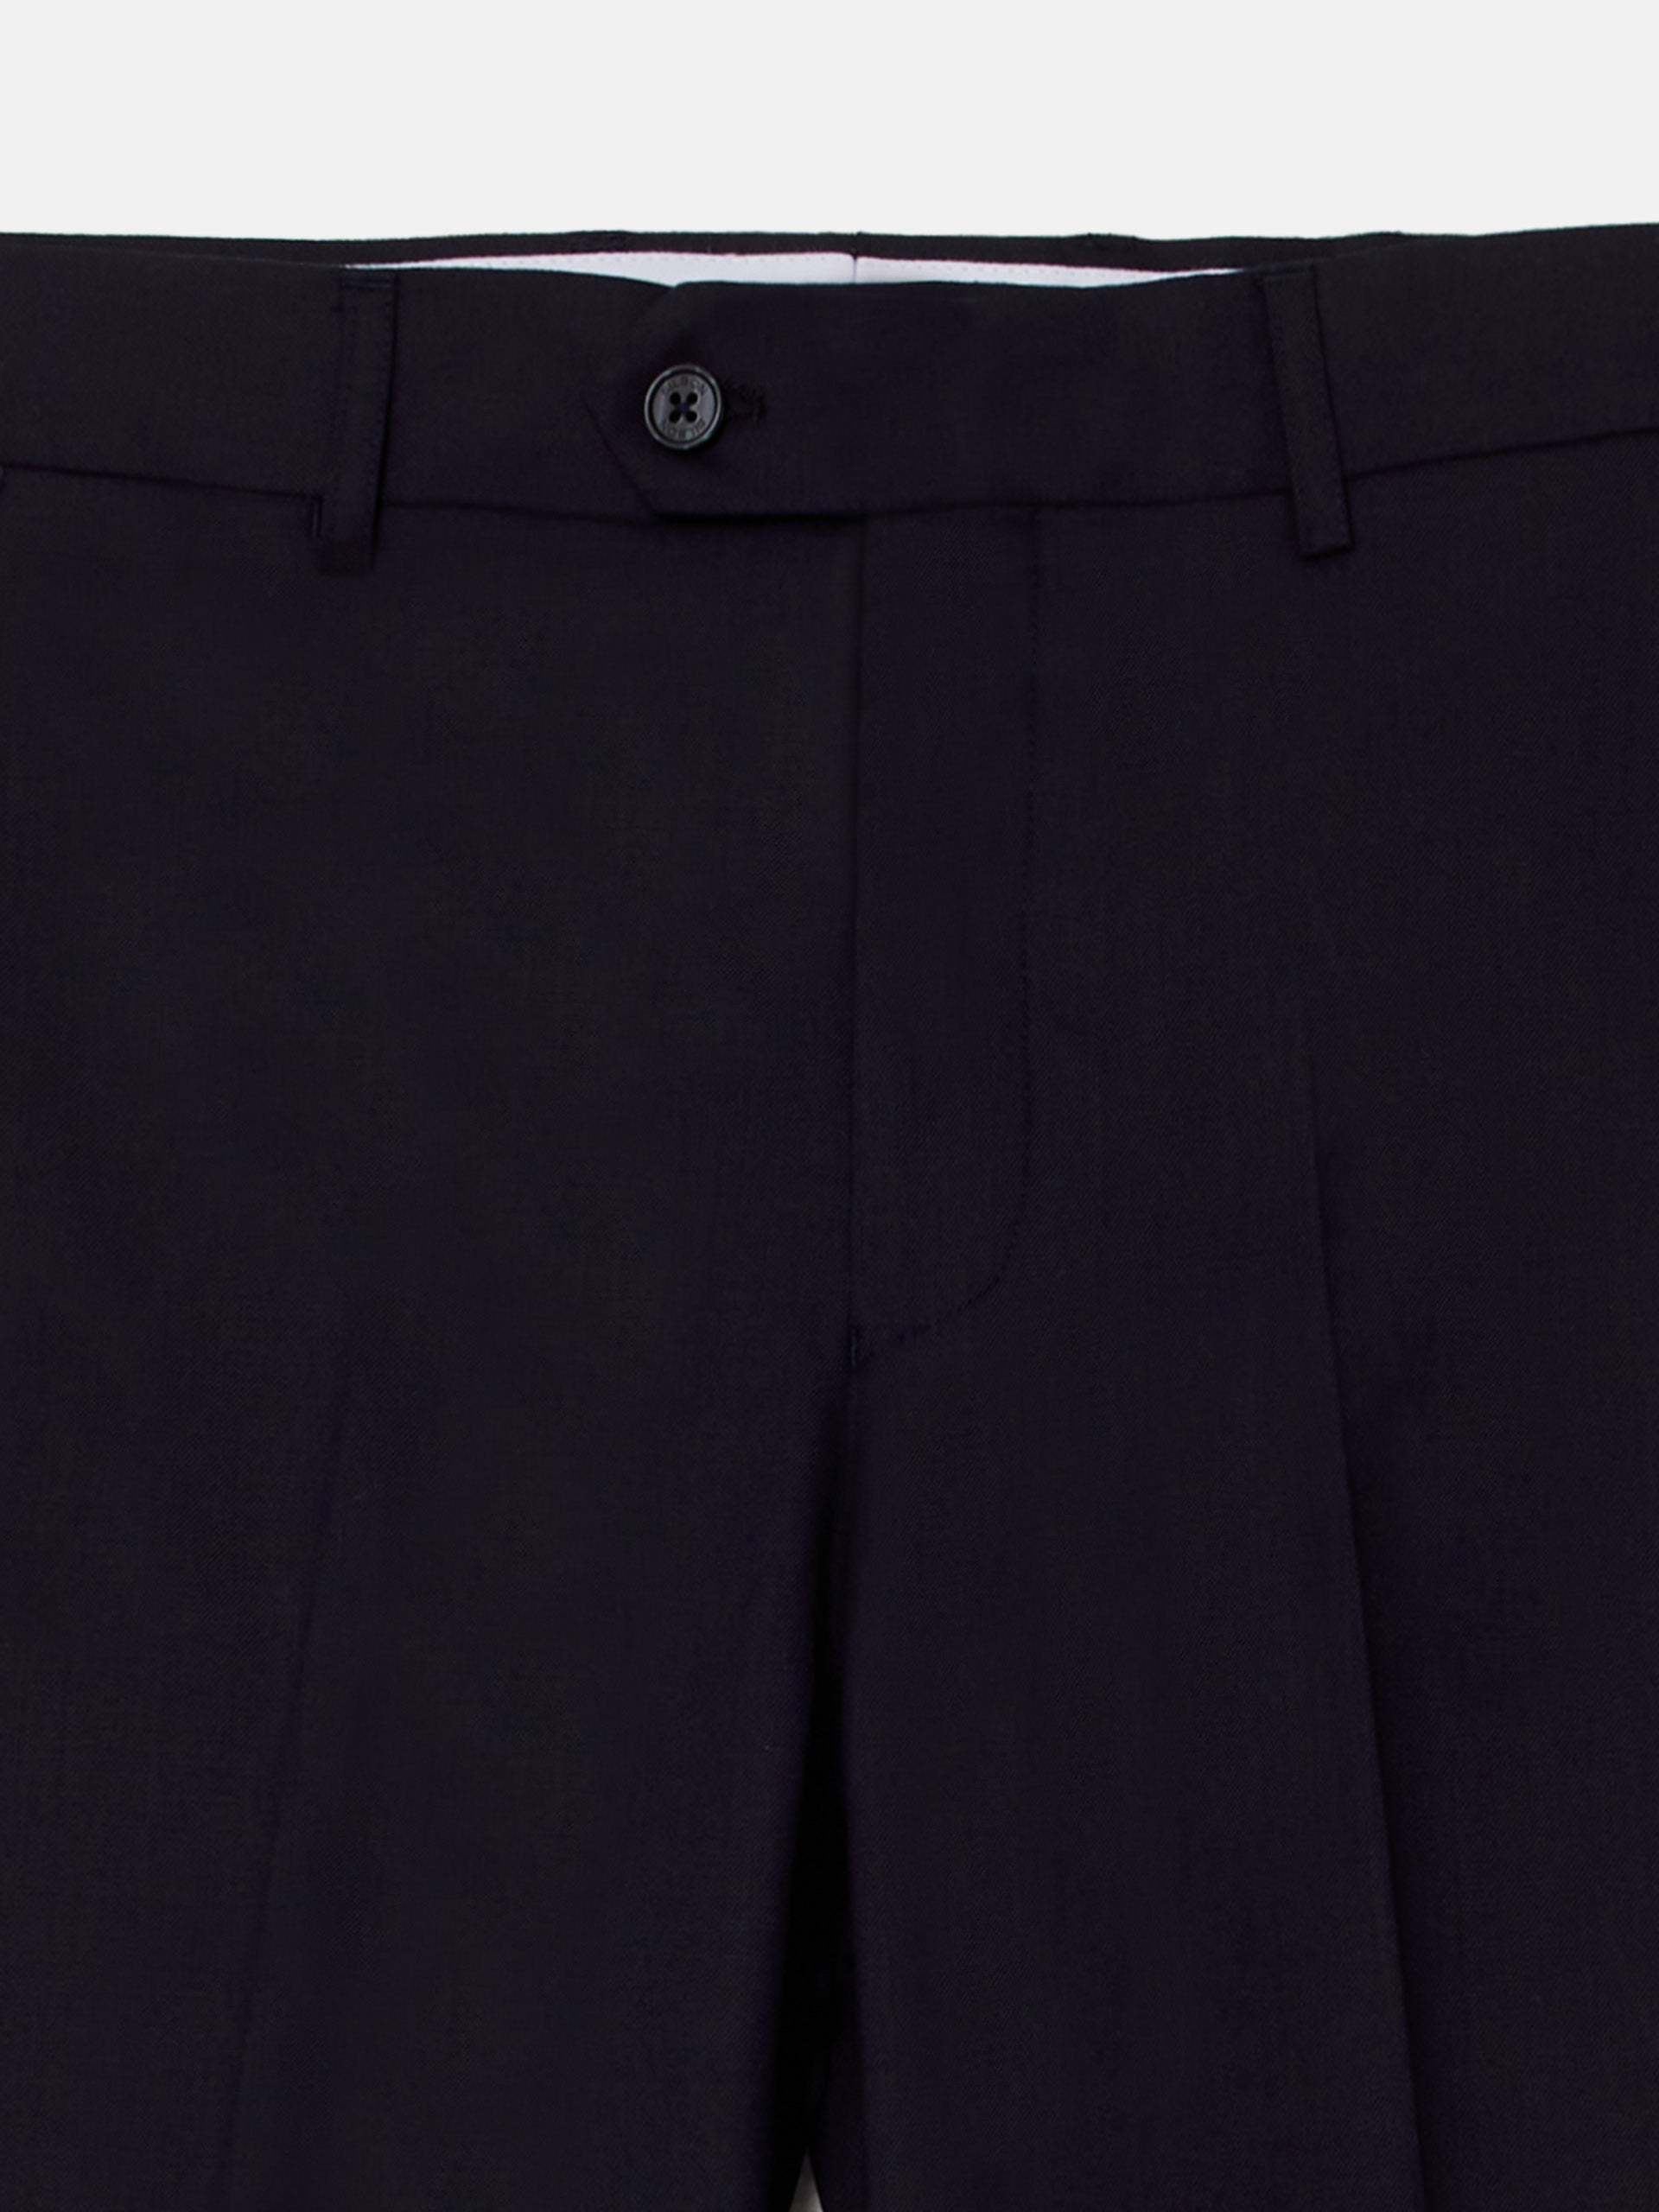 Natural stretch dark navy suit pants